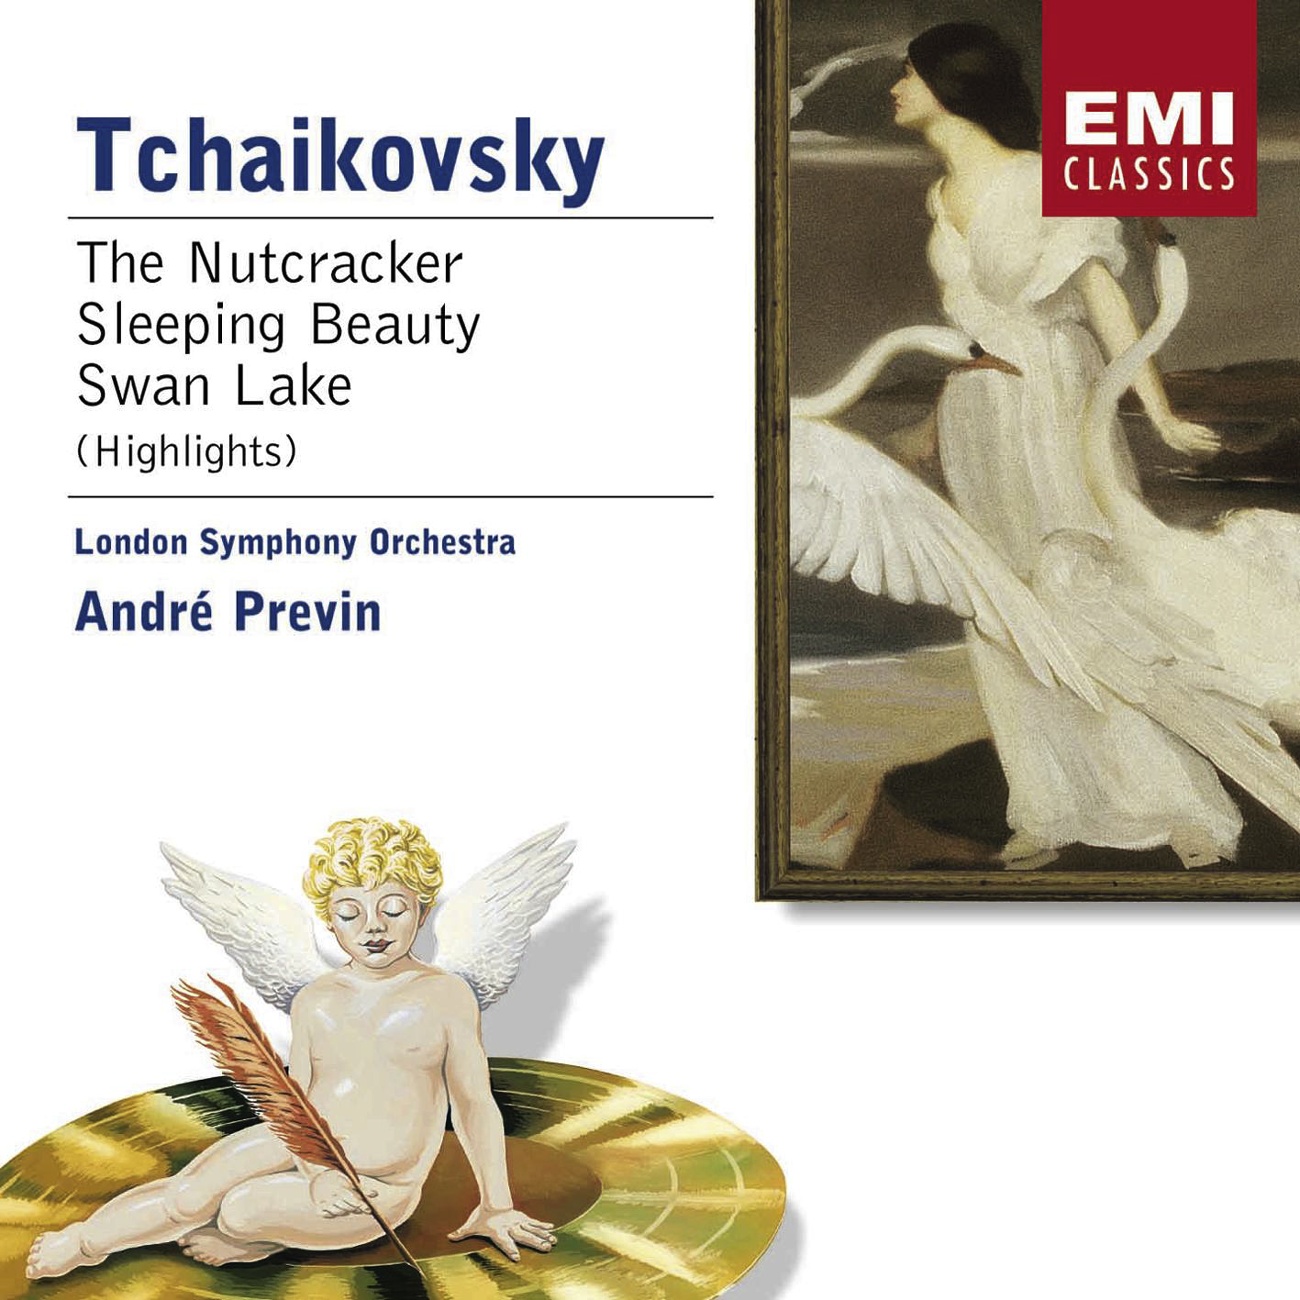 Tchaikovsky - Ballet highlights